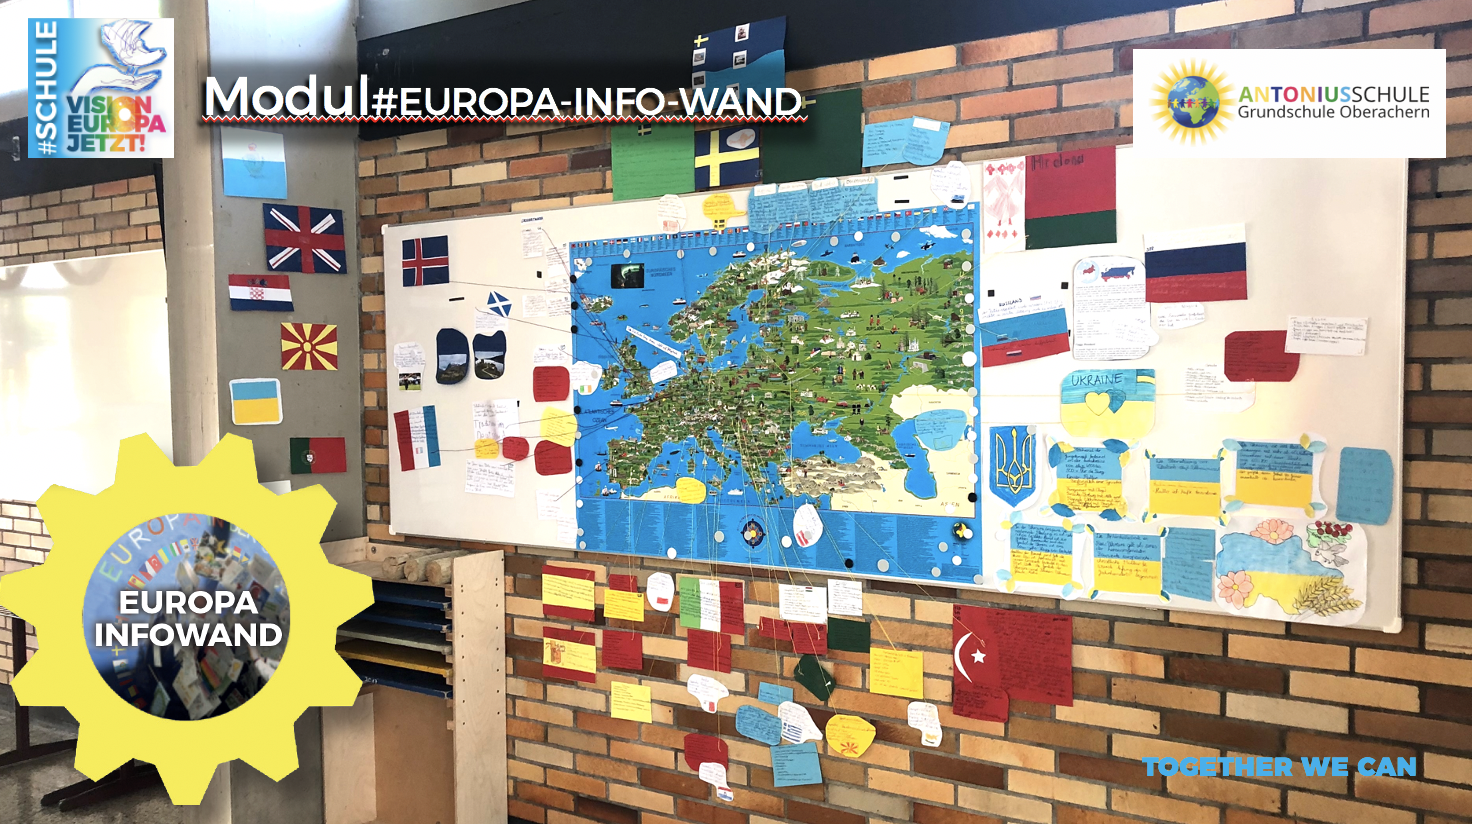 VISION-EUROPA-JETZT!#inderSchule_Modul#Europa-Info-Wand